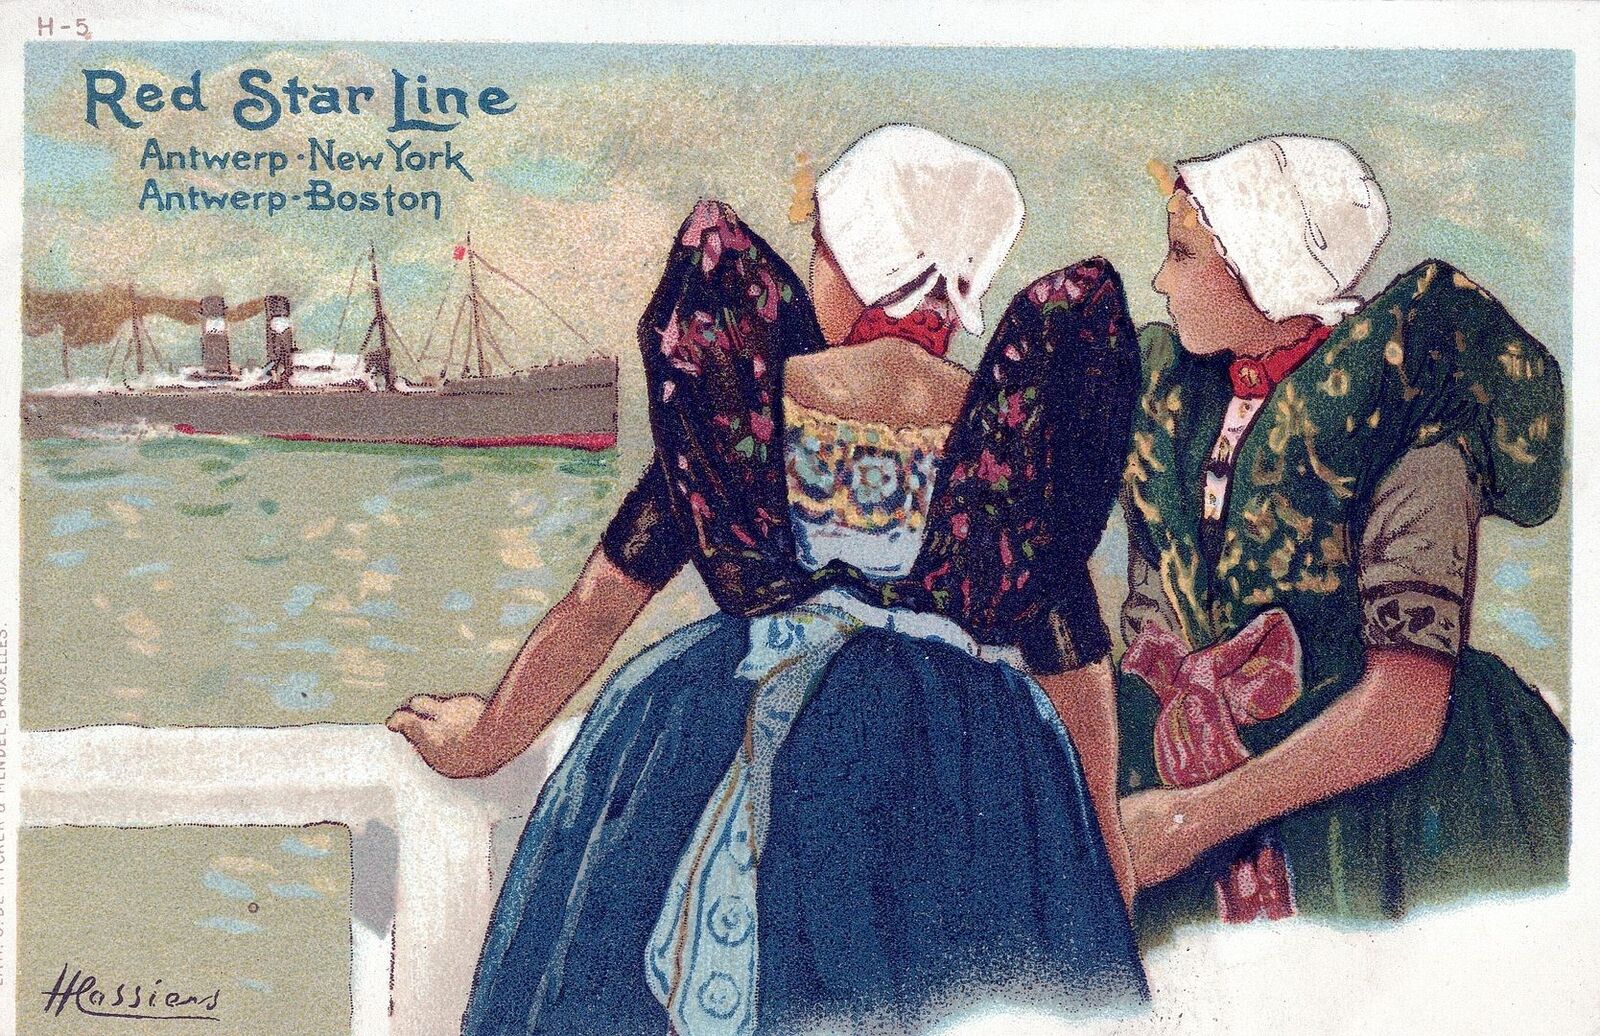 Cassiers Signed Two Girls Red Star Line Antwerp-New York, Antwerp-Boston - udb